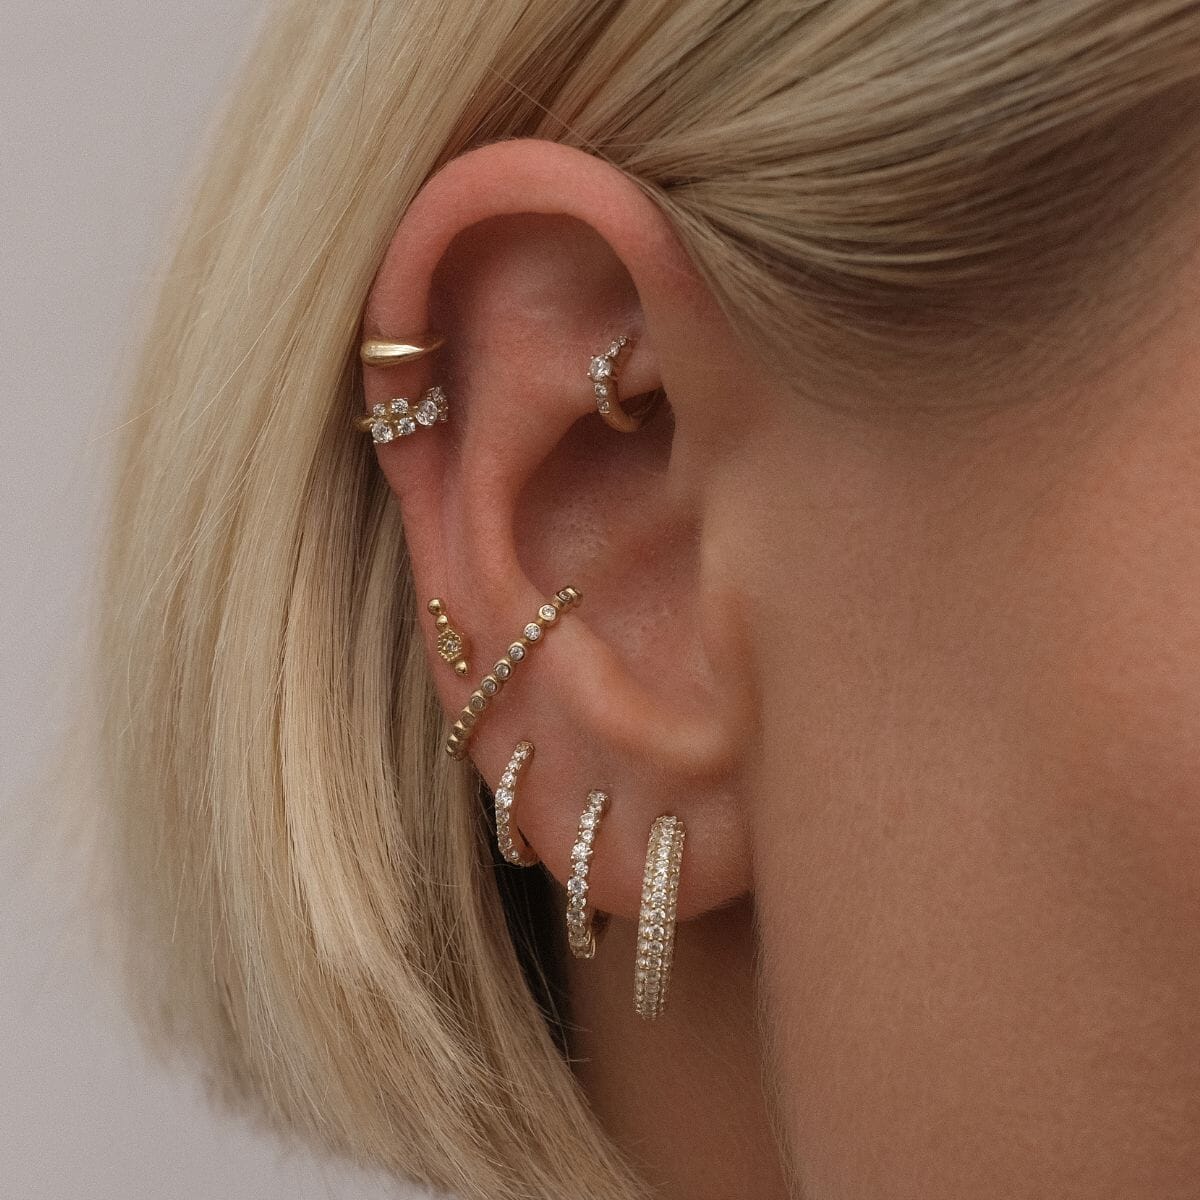 Latest Gold Hoop Earring Designs 2020 // Ear Piercing Ideas for  girls/Contact details in description - YouTube